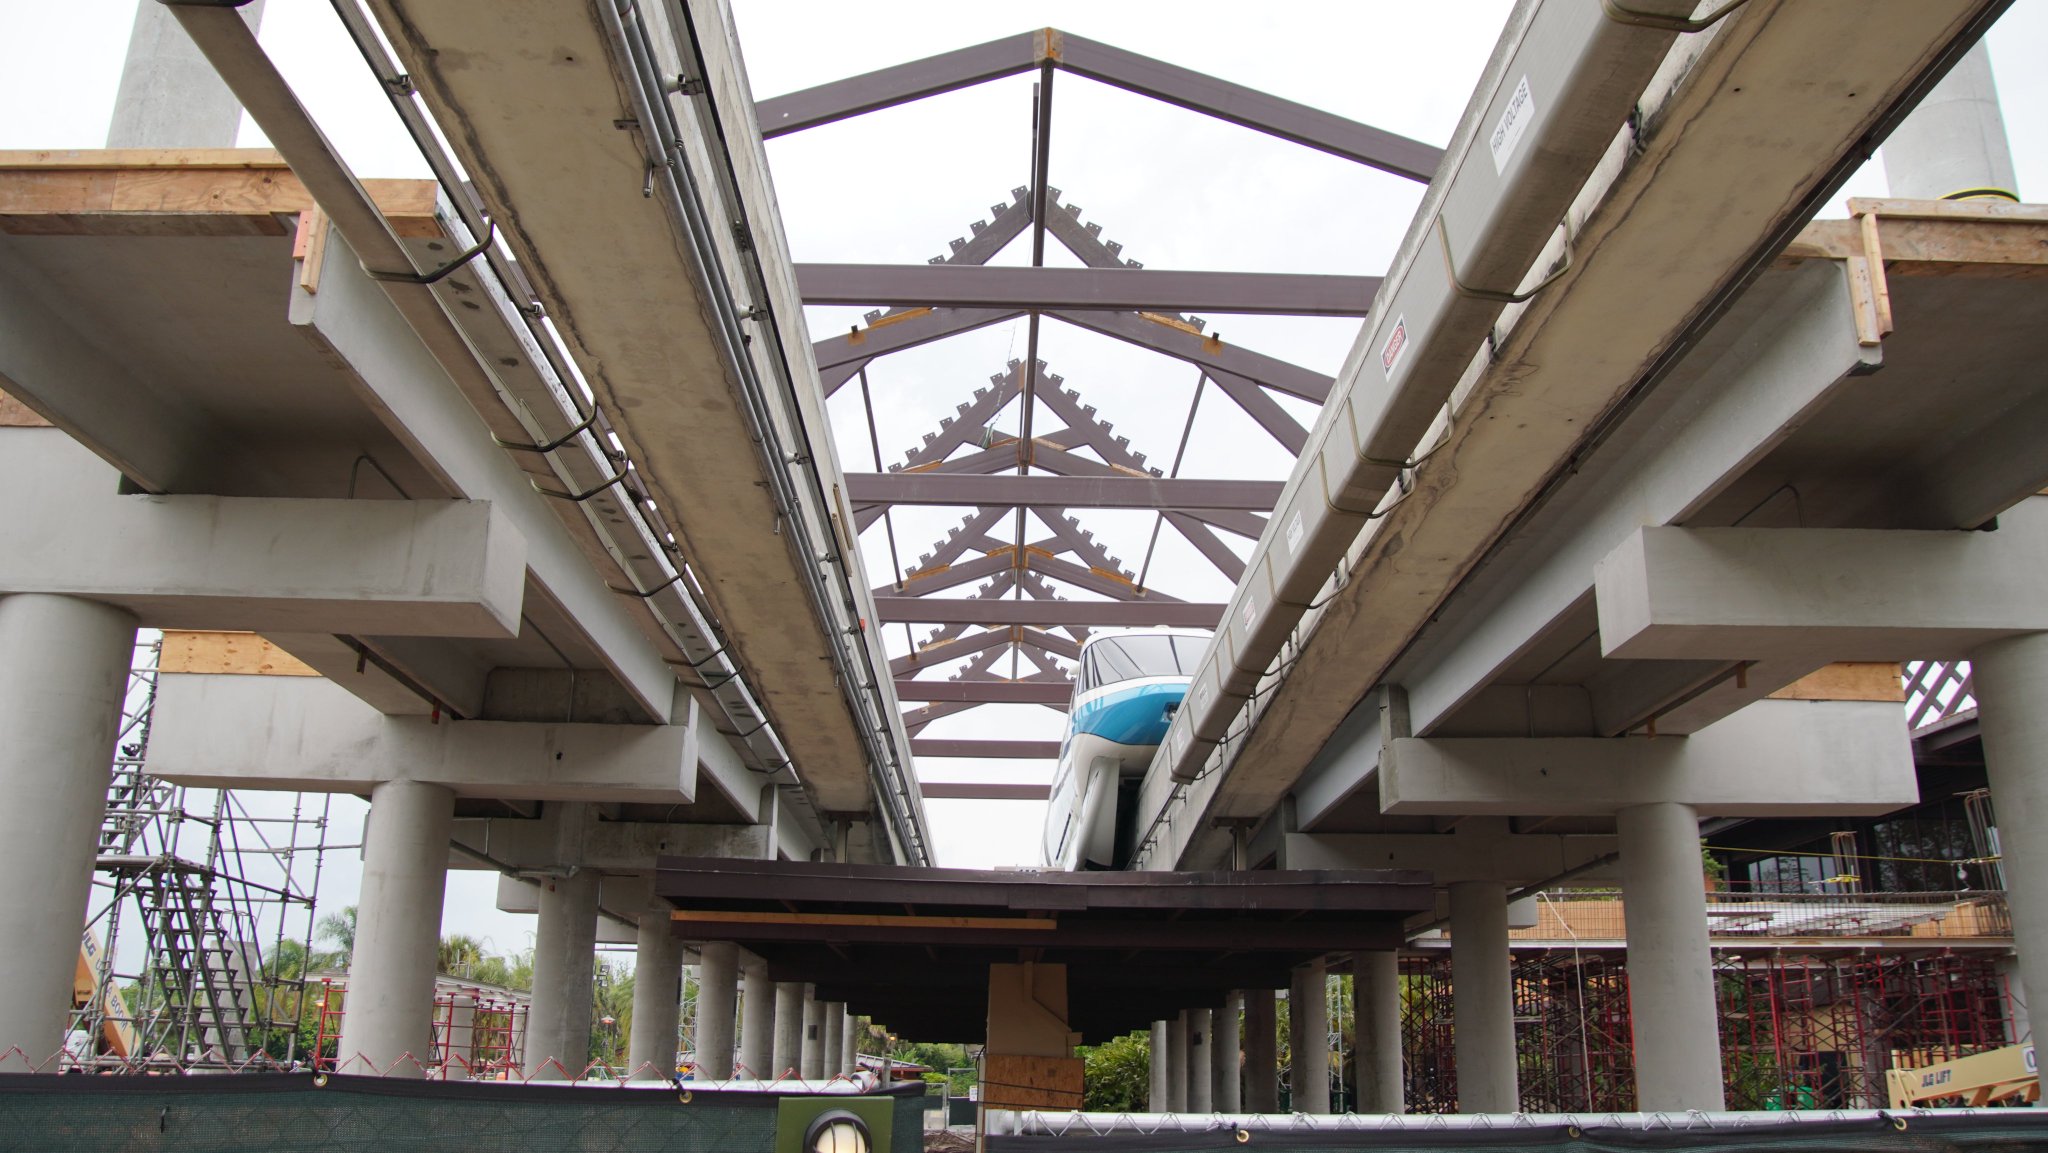 Disney's Polynesian Resort Monorail Station is taking shape